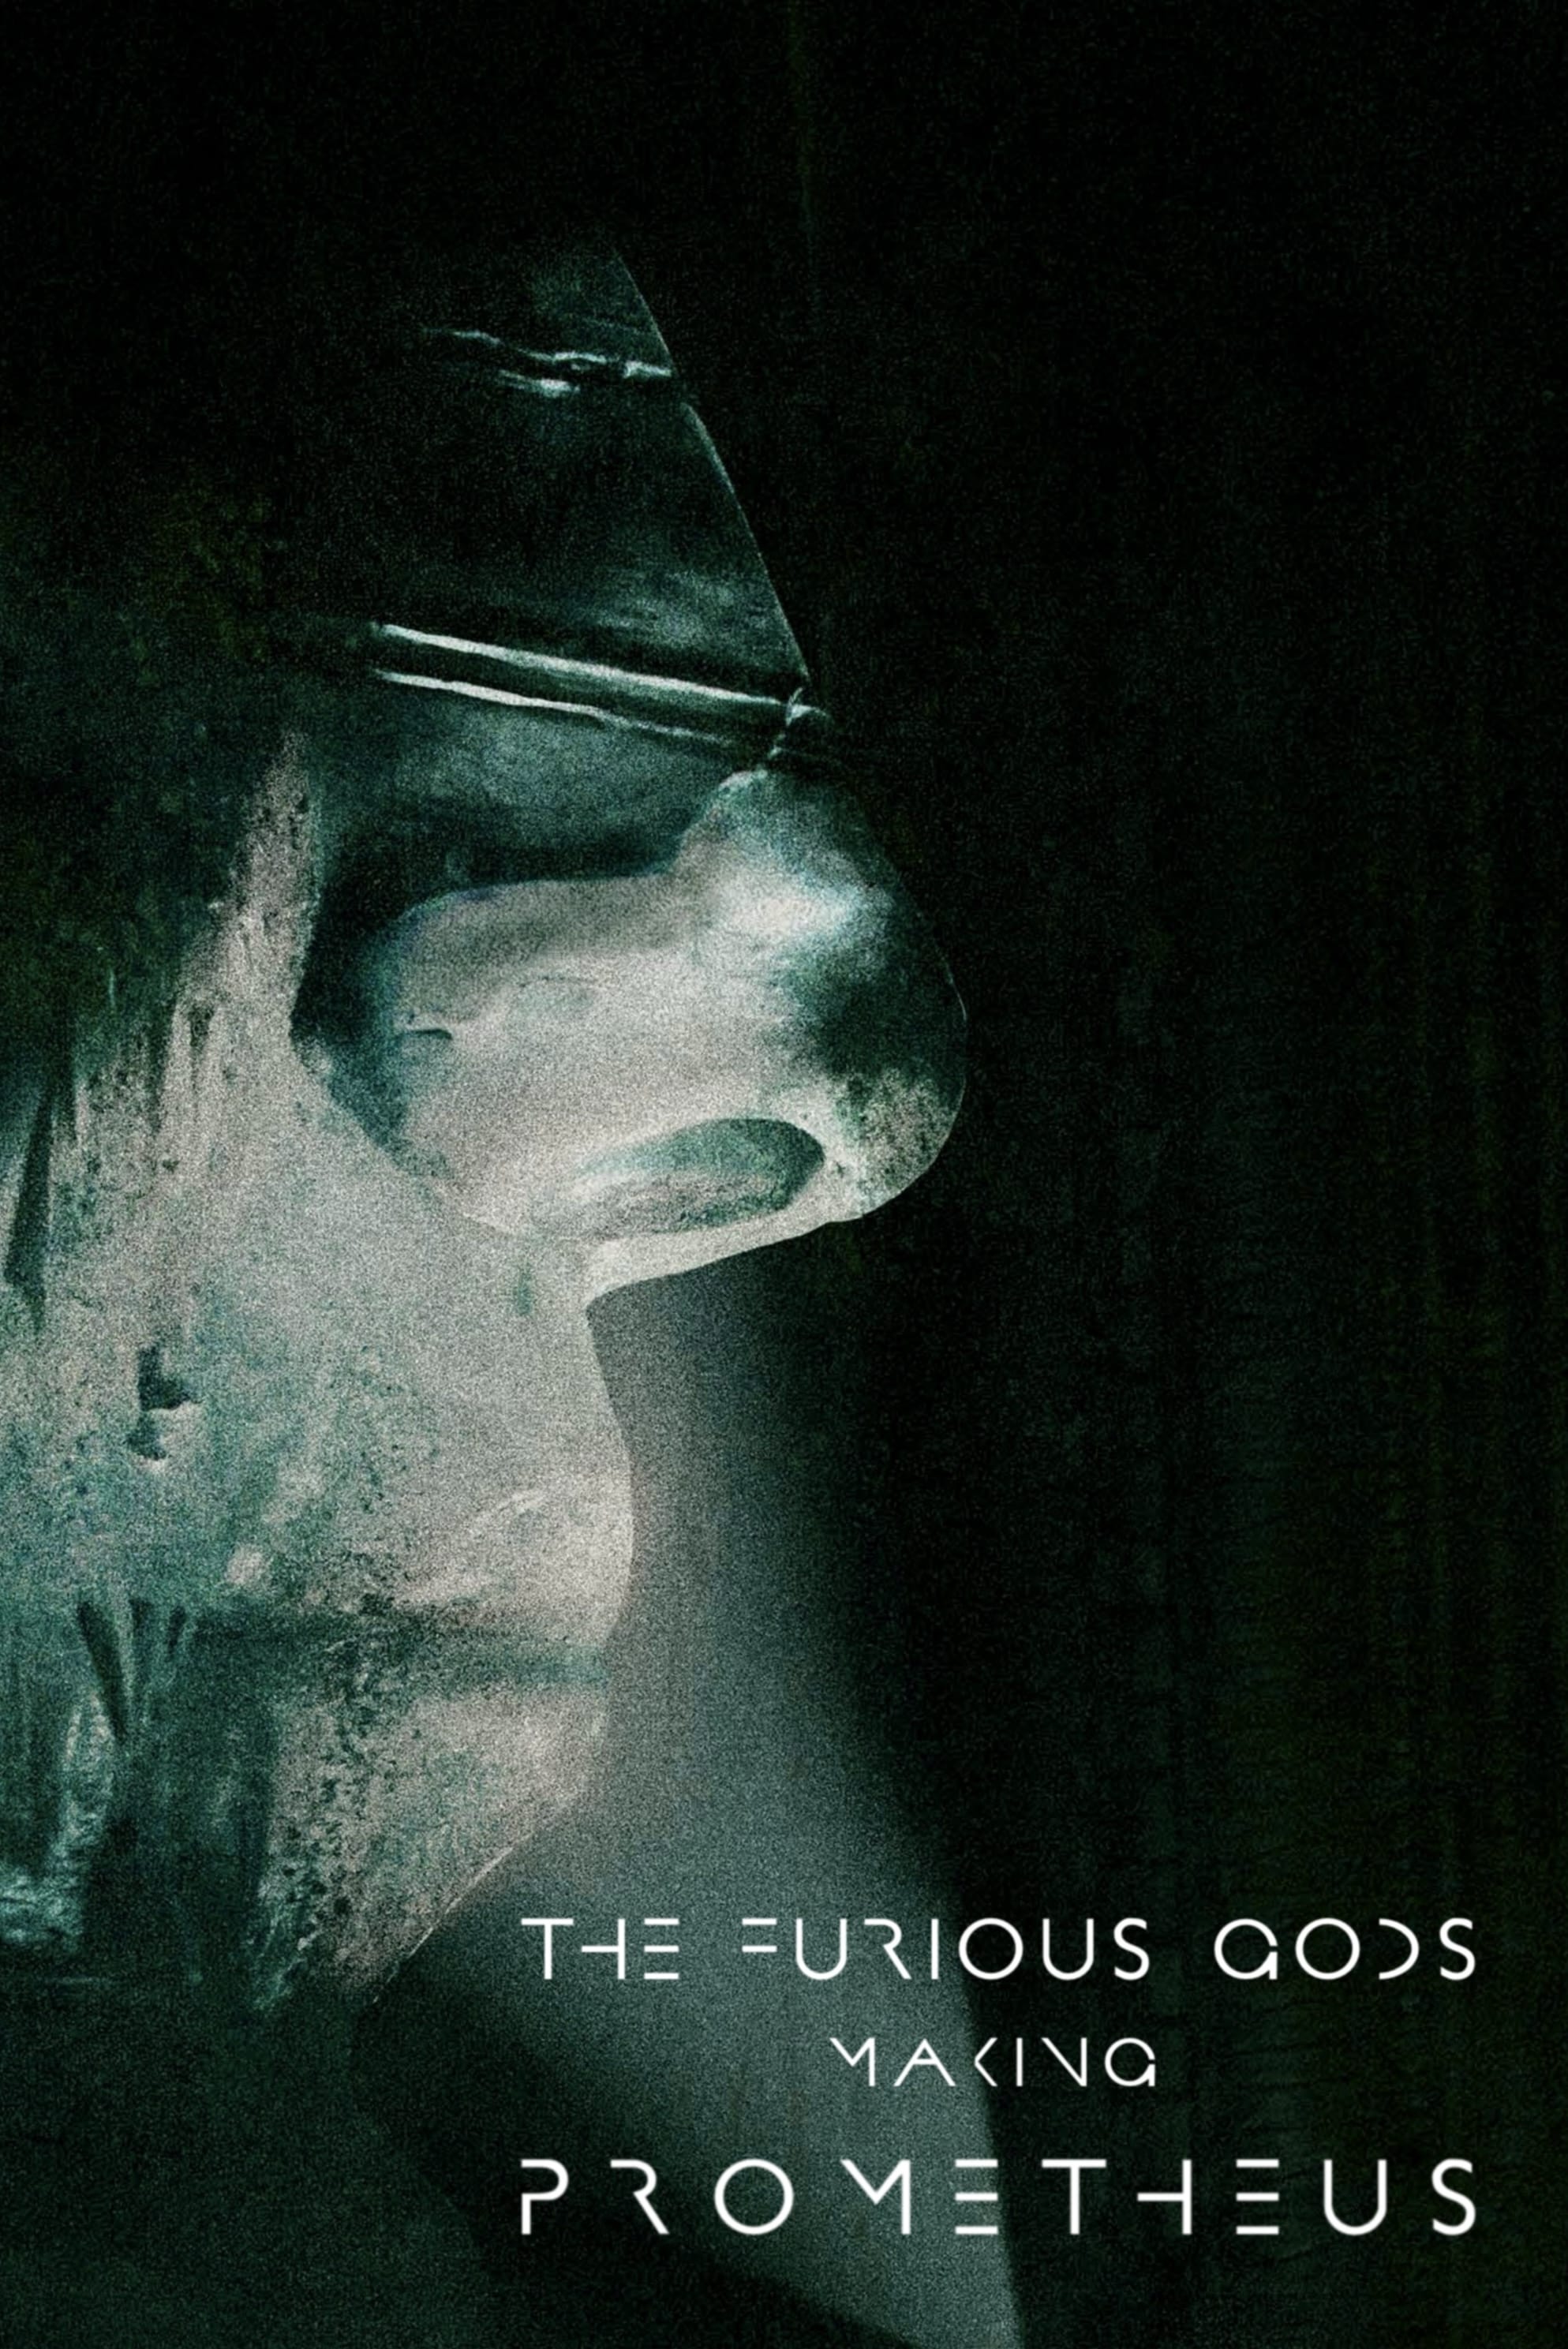 The Furious Gods: Making Prometheus (2012)